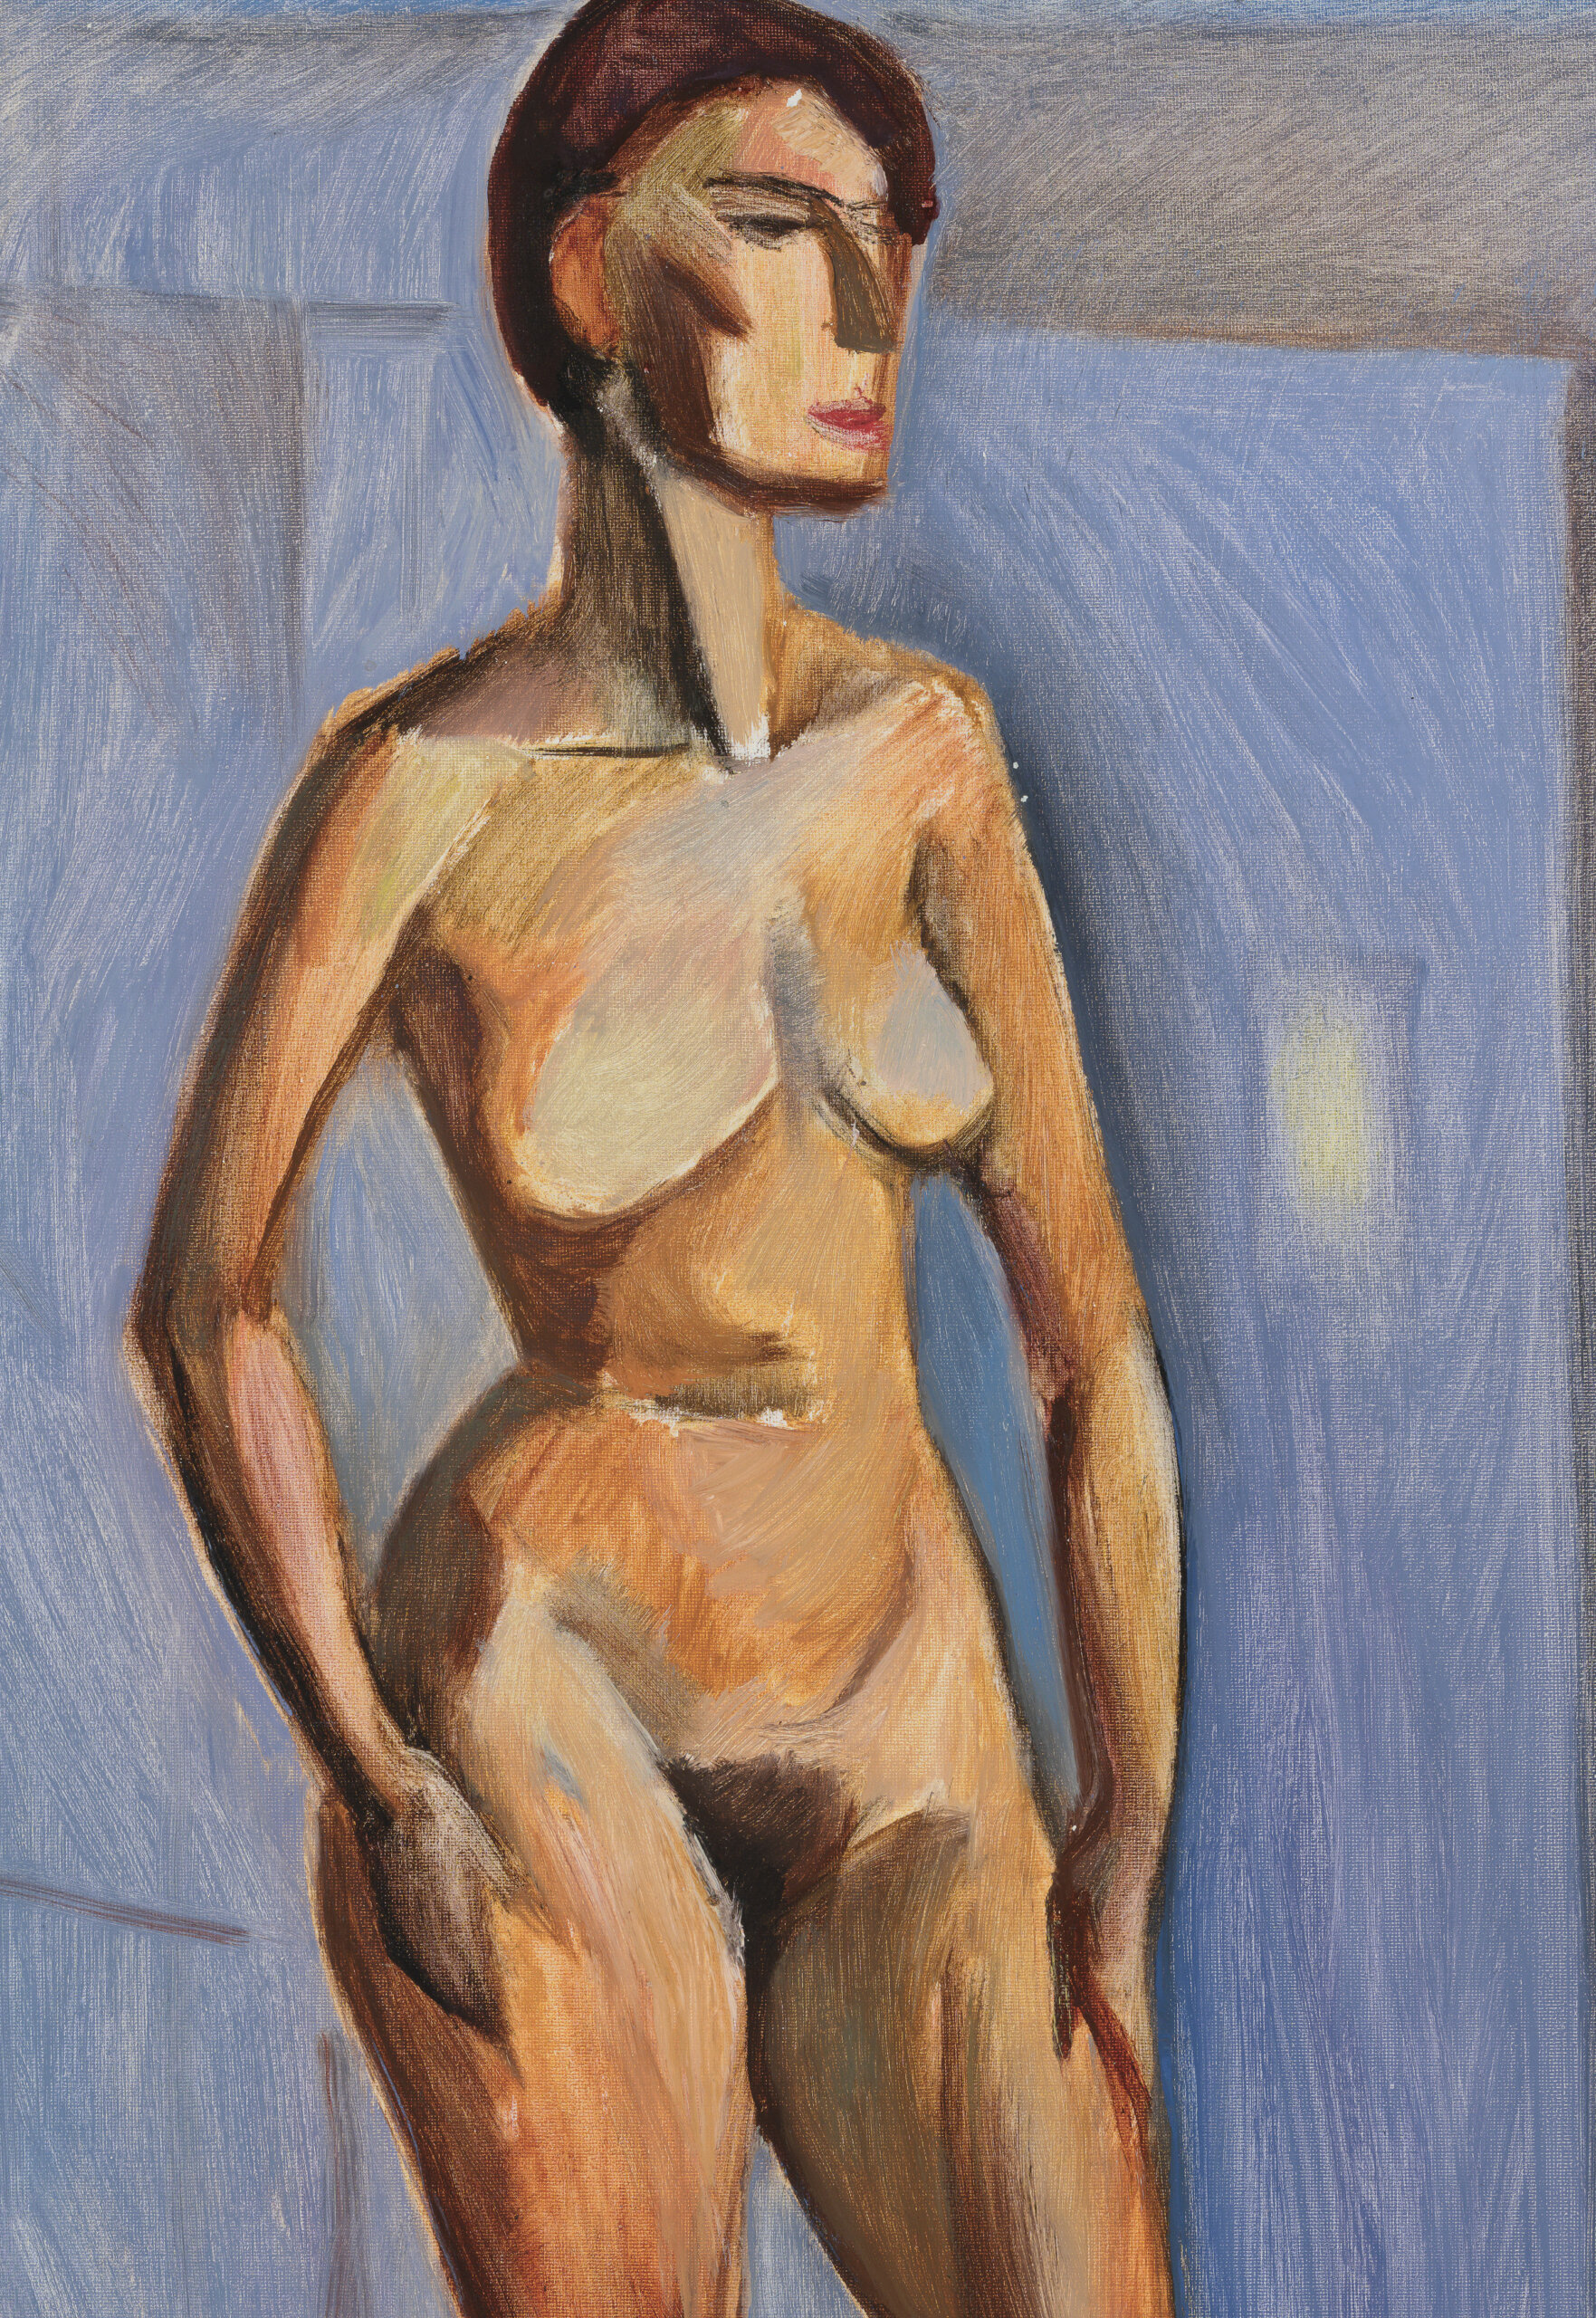 Raivo Korstnik “Akt sinise maja taustal”, 1964. 49,5 x 35,2 cm.